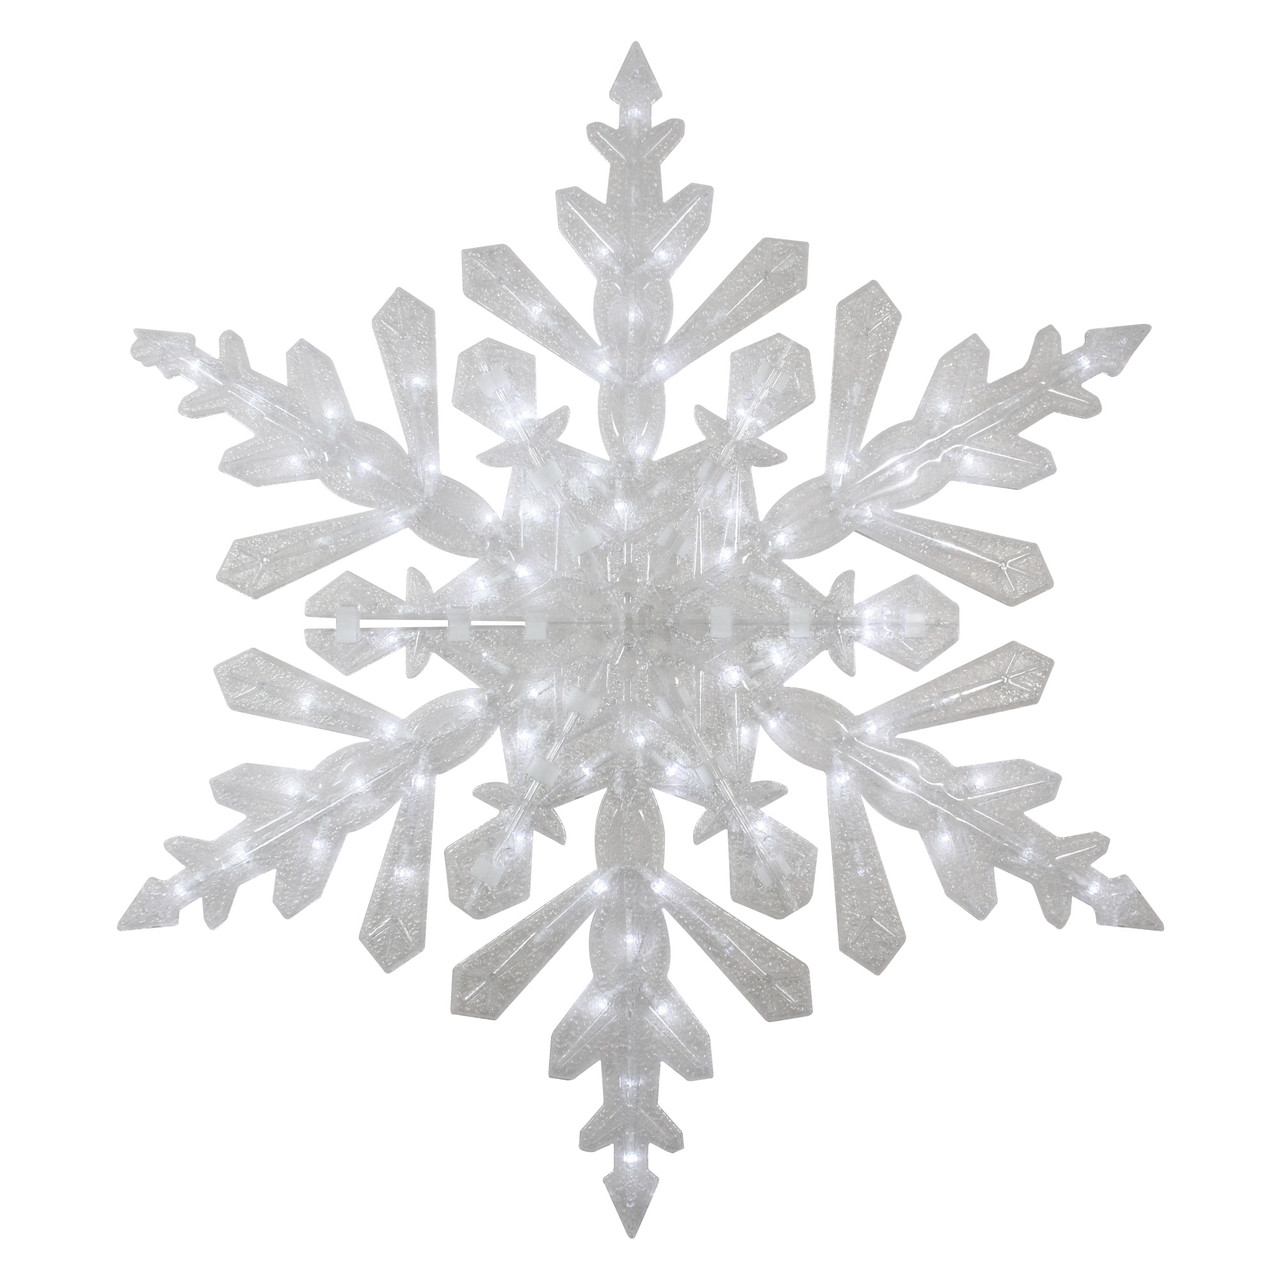  Large Snowflakes - Set of 5 White Glittered Snowflakes